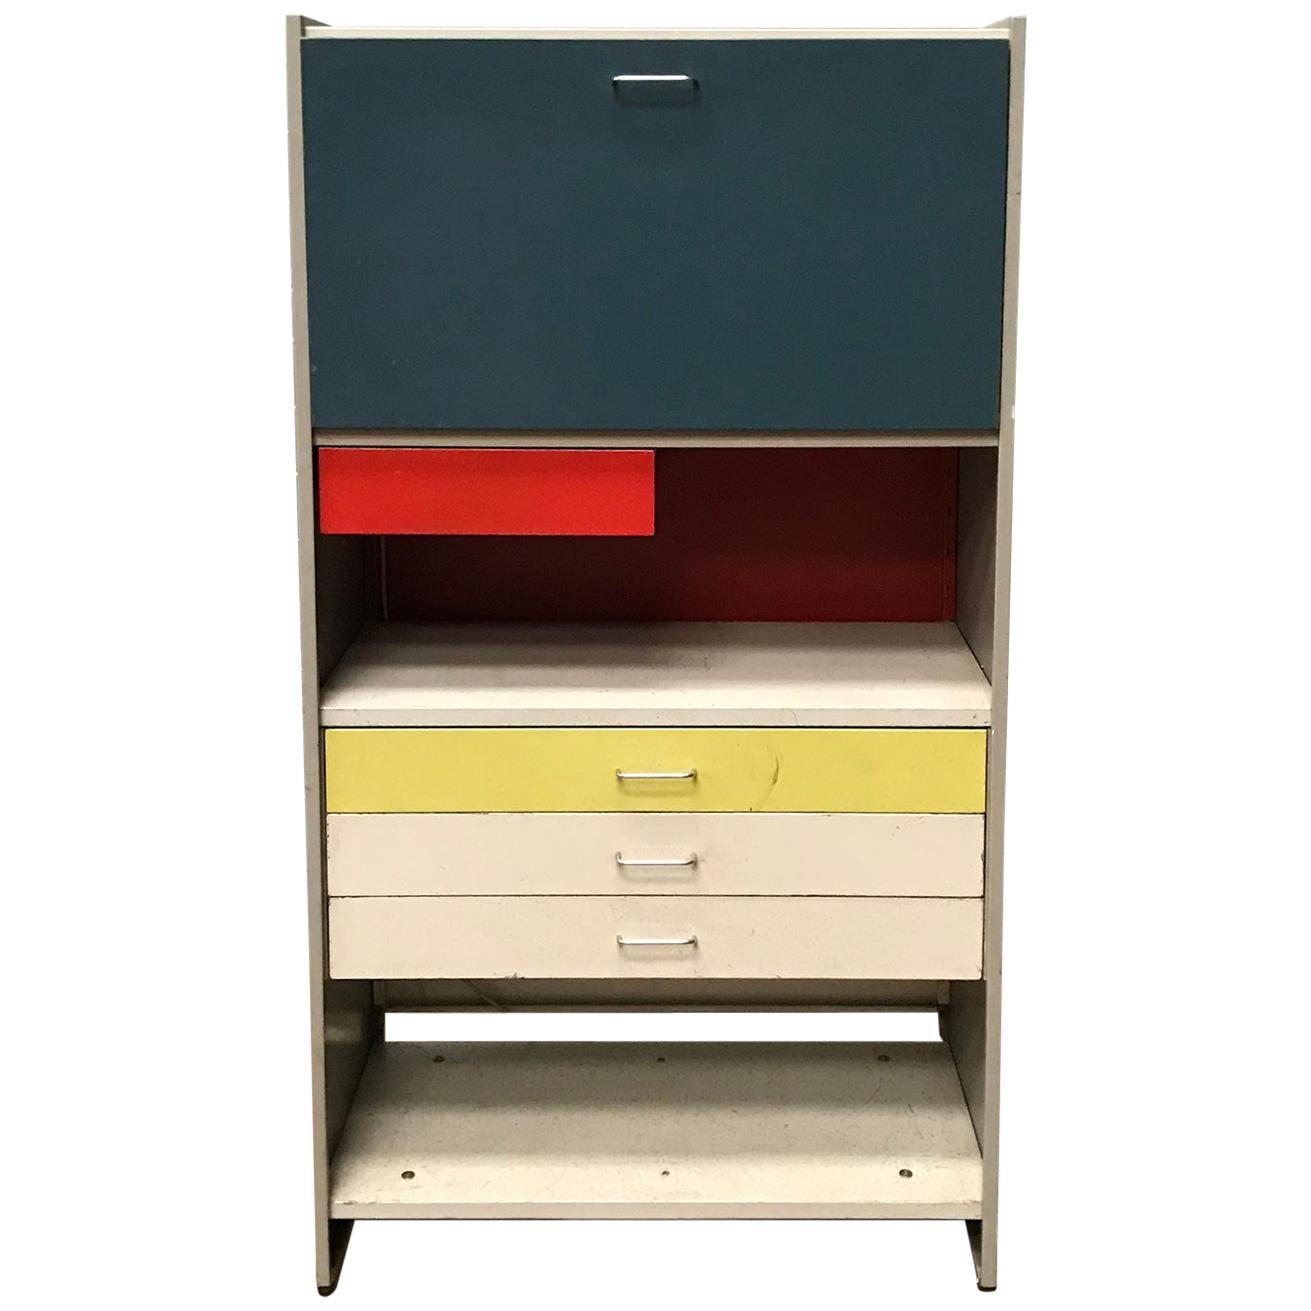 1959, Cordemeyer, Gispen, Desk Storage Cabinet 5600 with Folding Desktop For Sale